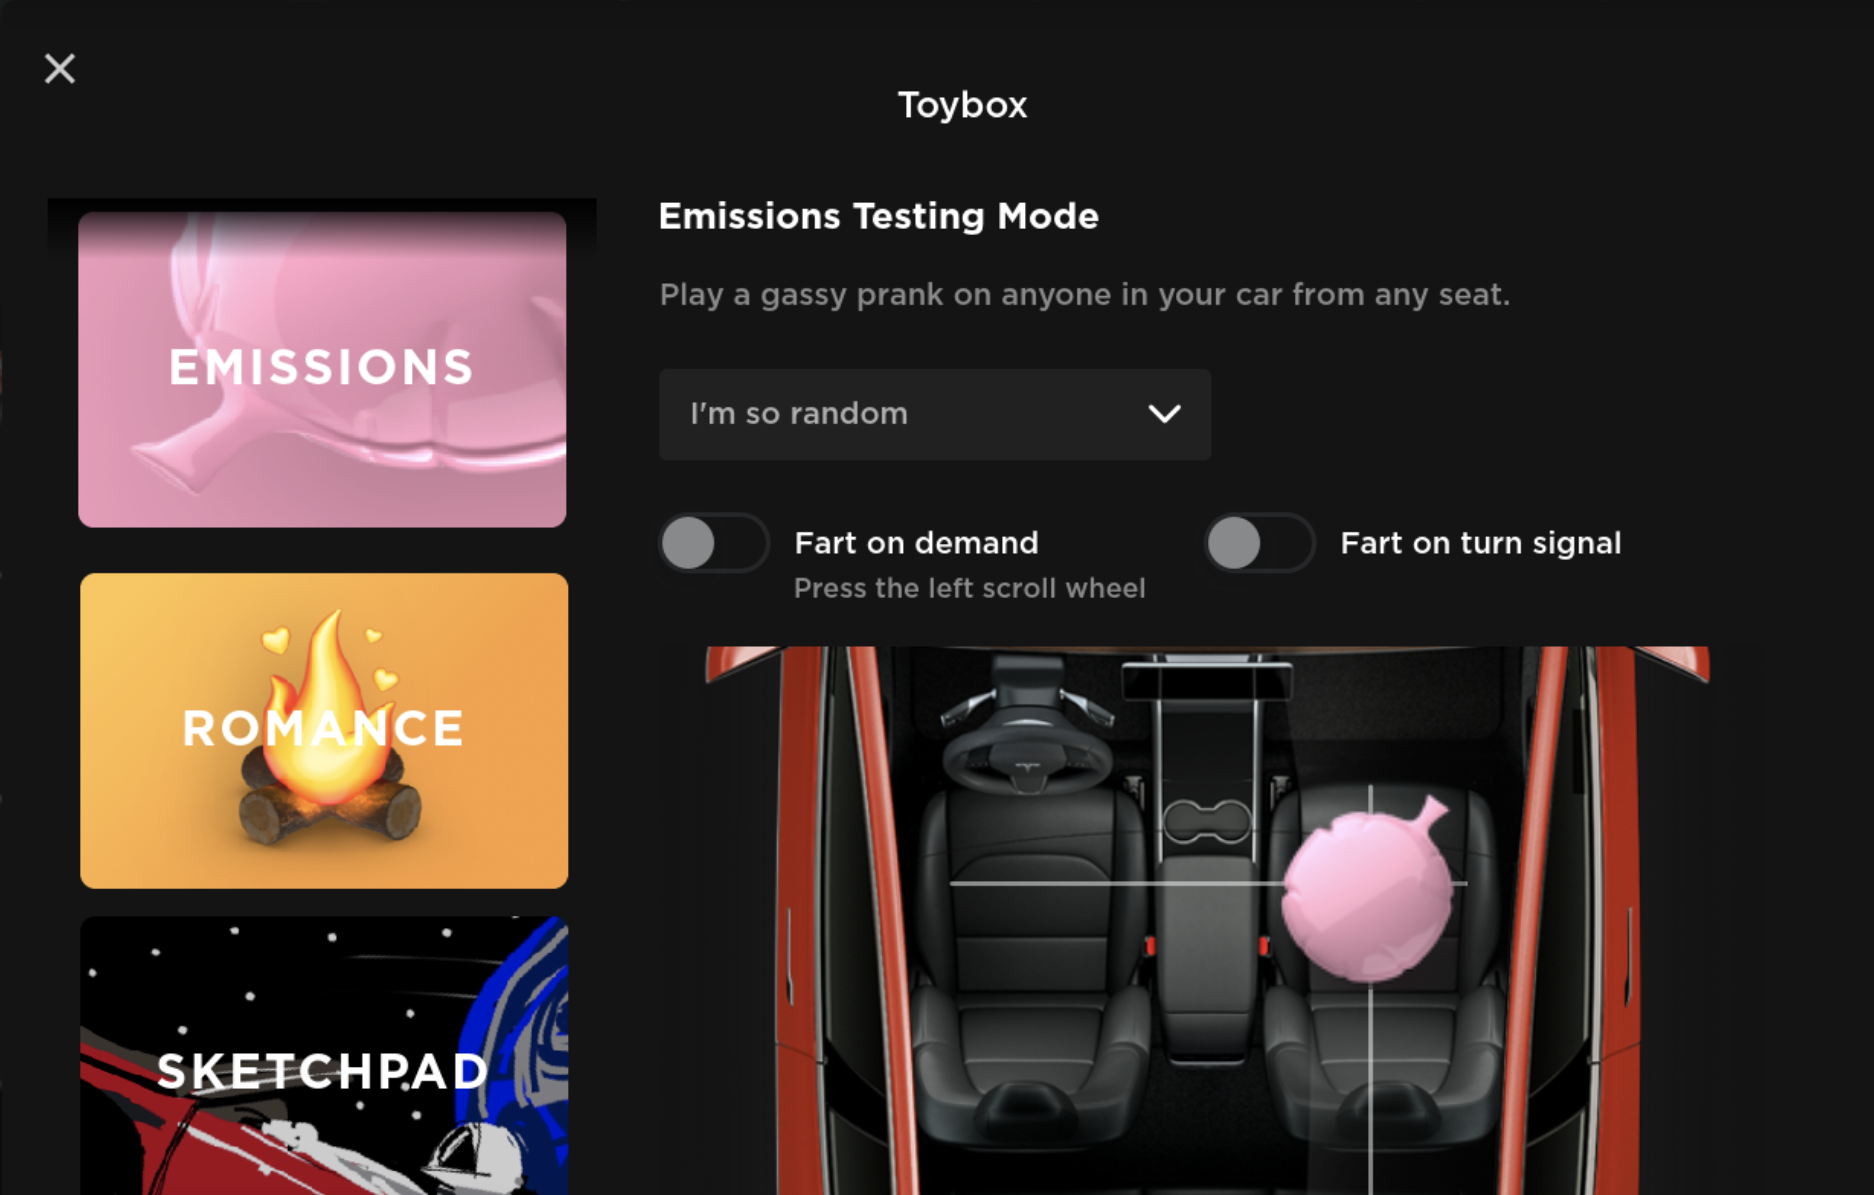 Tesla Tesla Toybox feature in update 2020.16.3